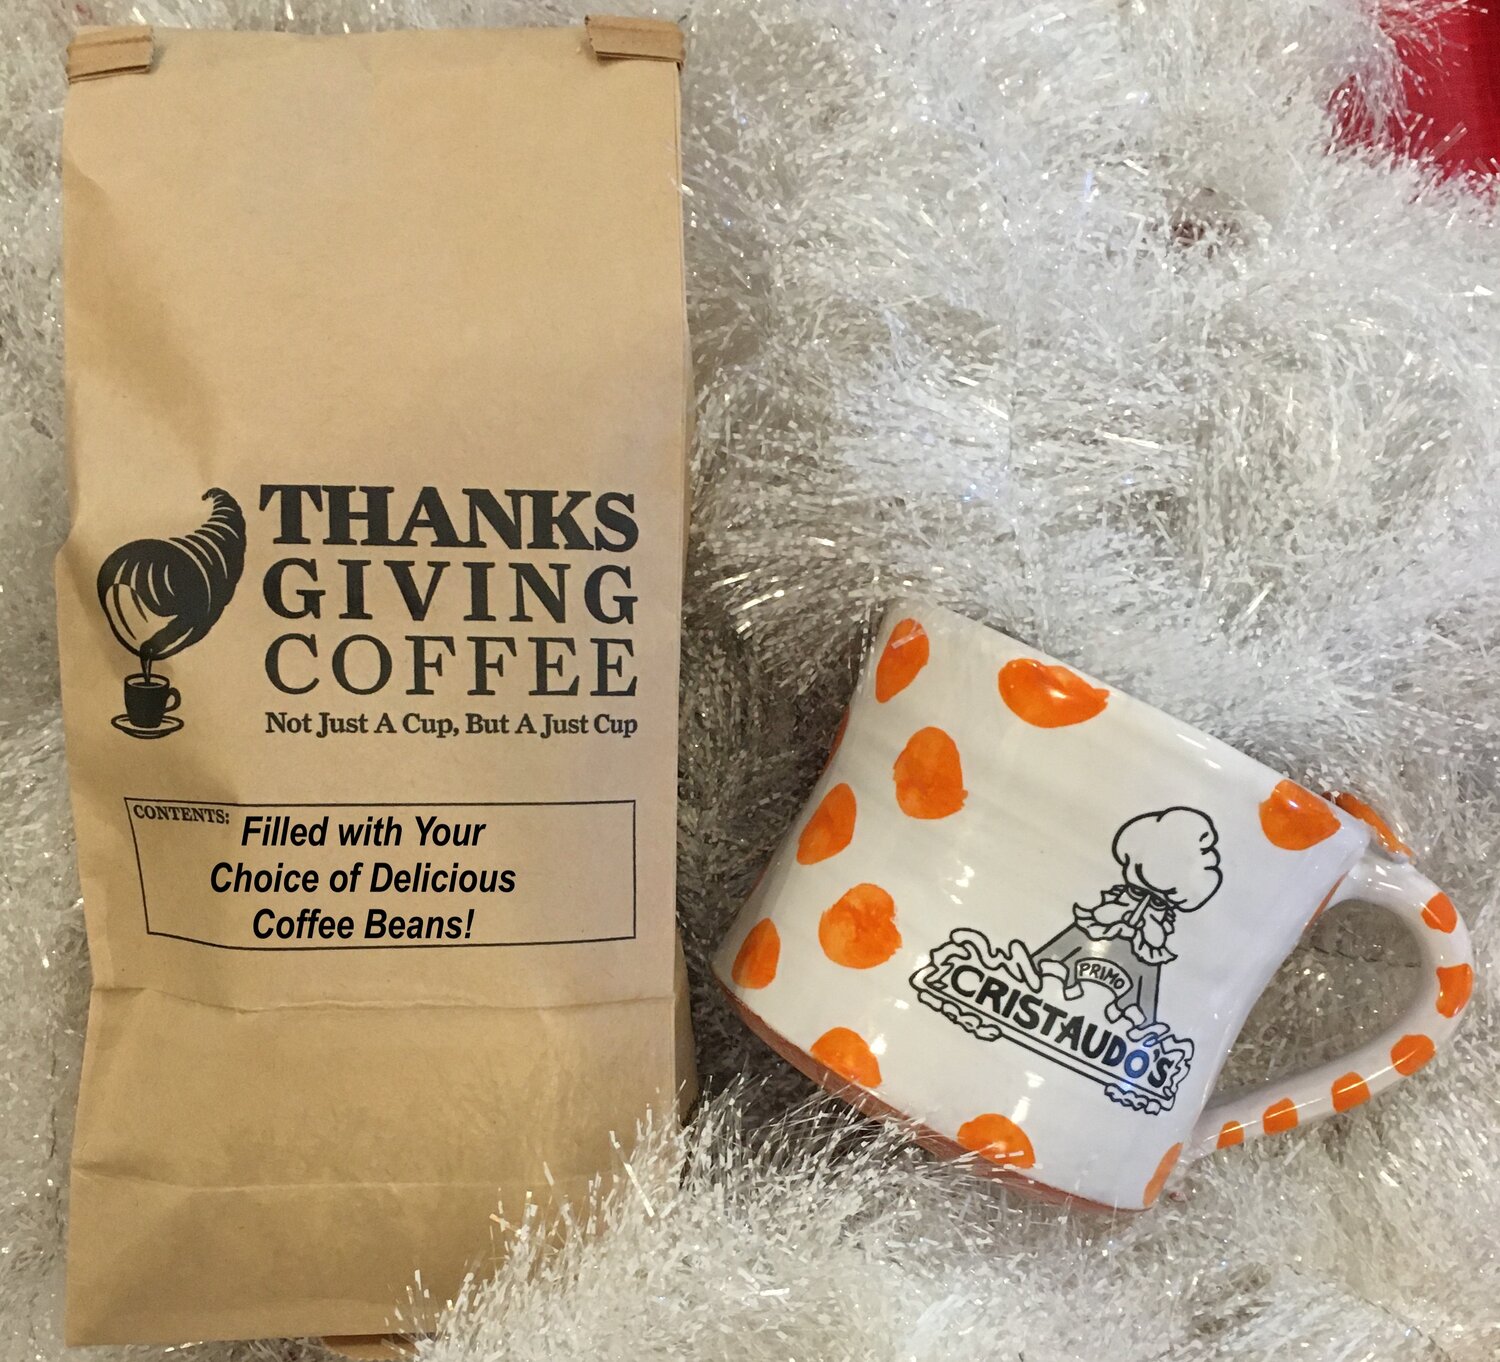 Gift Bag with Locally Made Cristaudo's Mug and Thanksgiving Fair